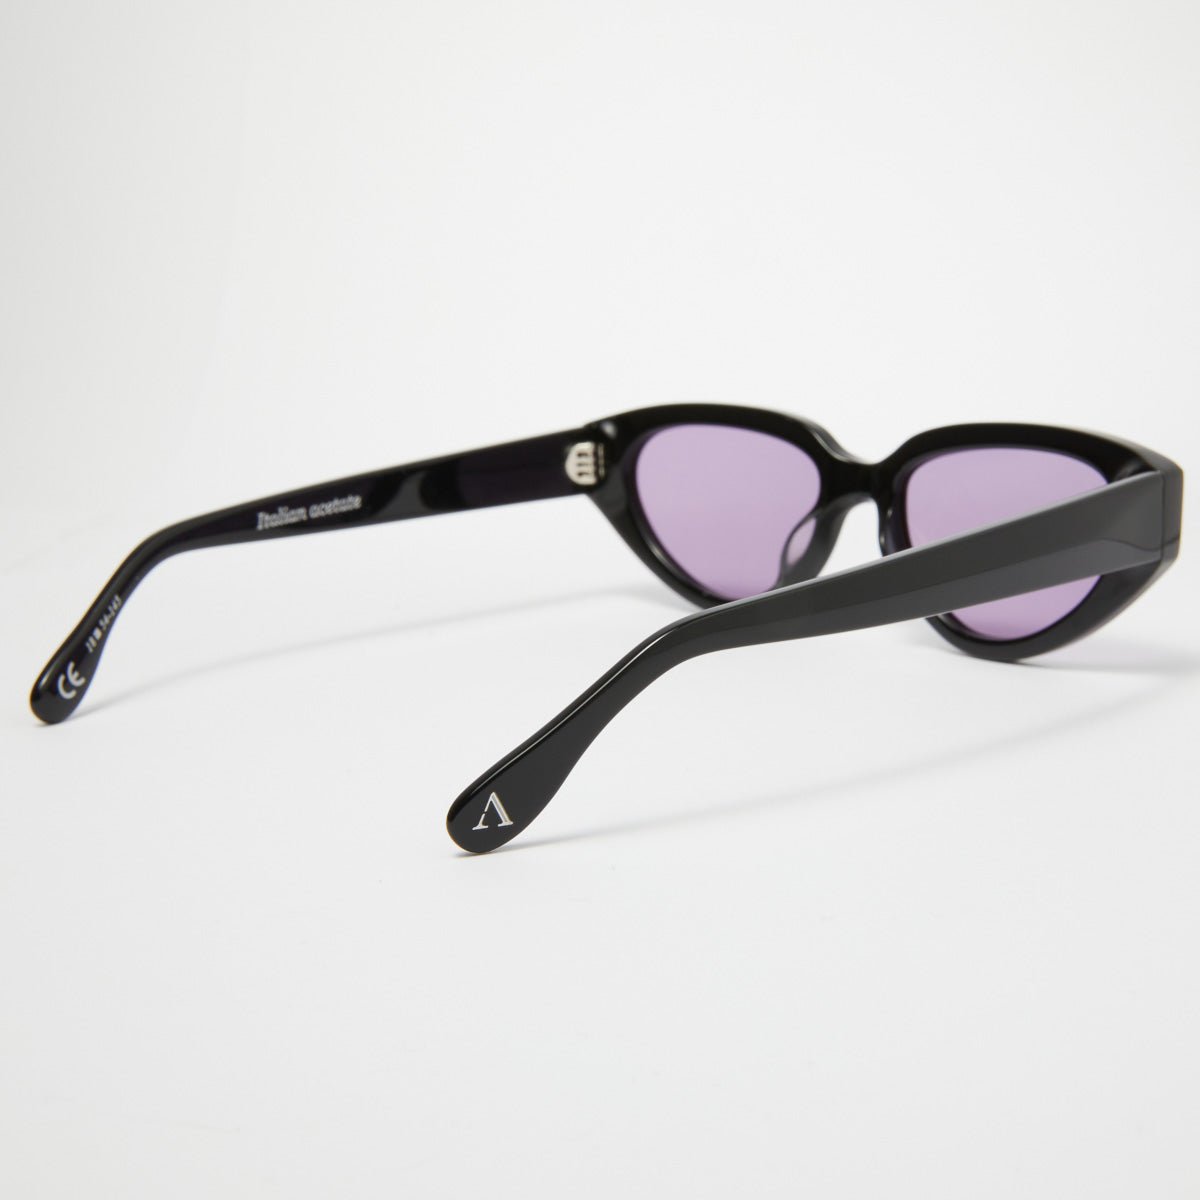 OMEN - Black Frames / Purple Lens ŁEOIDE